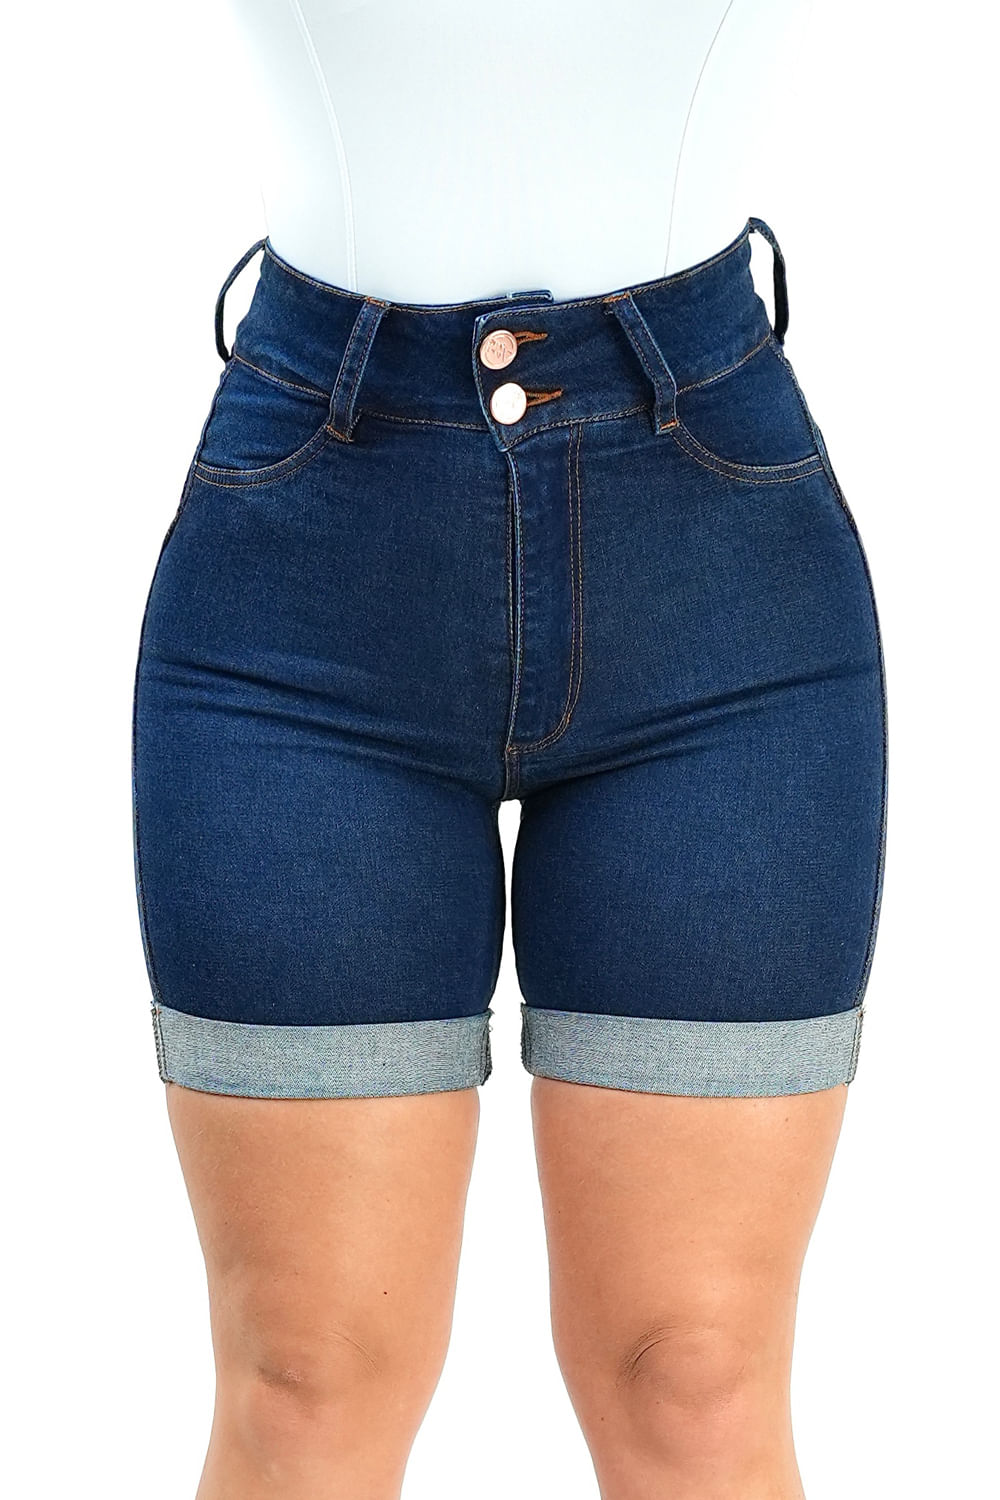 Shorts Feminino Plus Size 36 Ao 52 Bermuda Jeans Meia Coxa